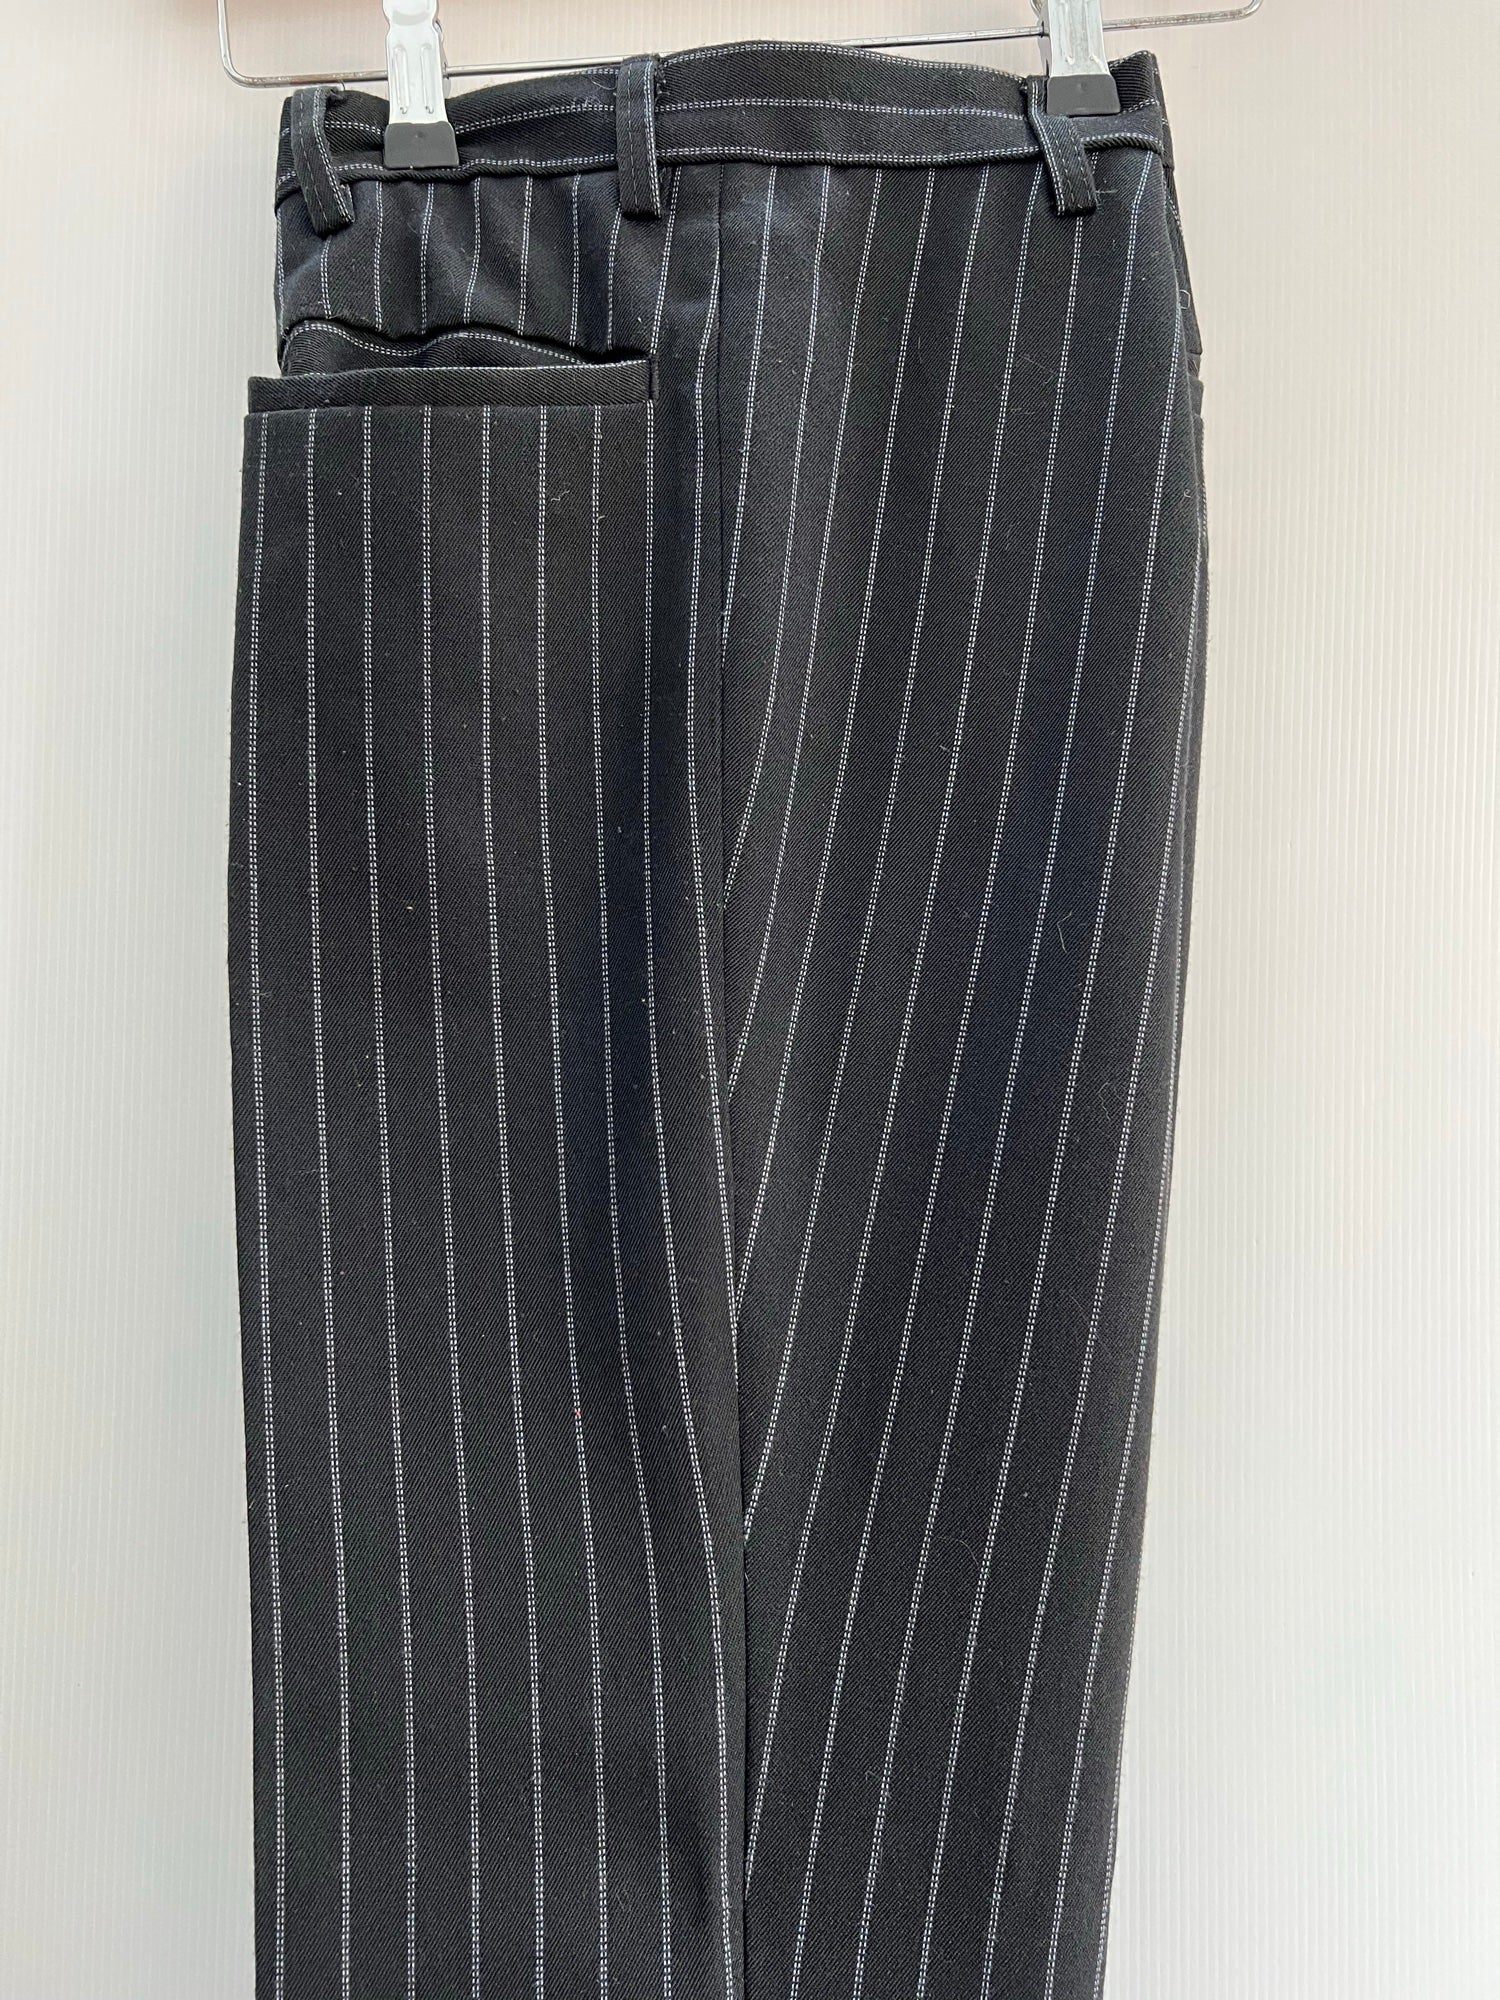 W32  vintage  Urban Village Vintage  trousers  stripe  pleat leg  pleat front  pinstripe  mens  L32  flares  flared leg  check  black  70s  70  1970s